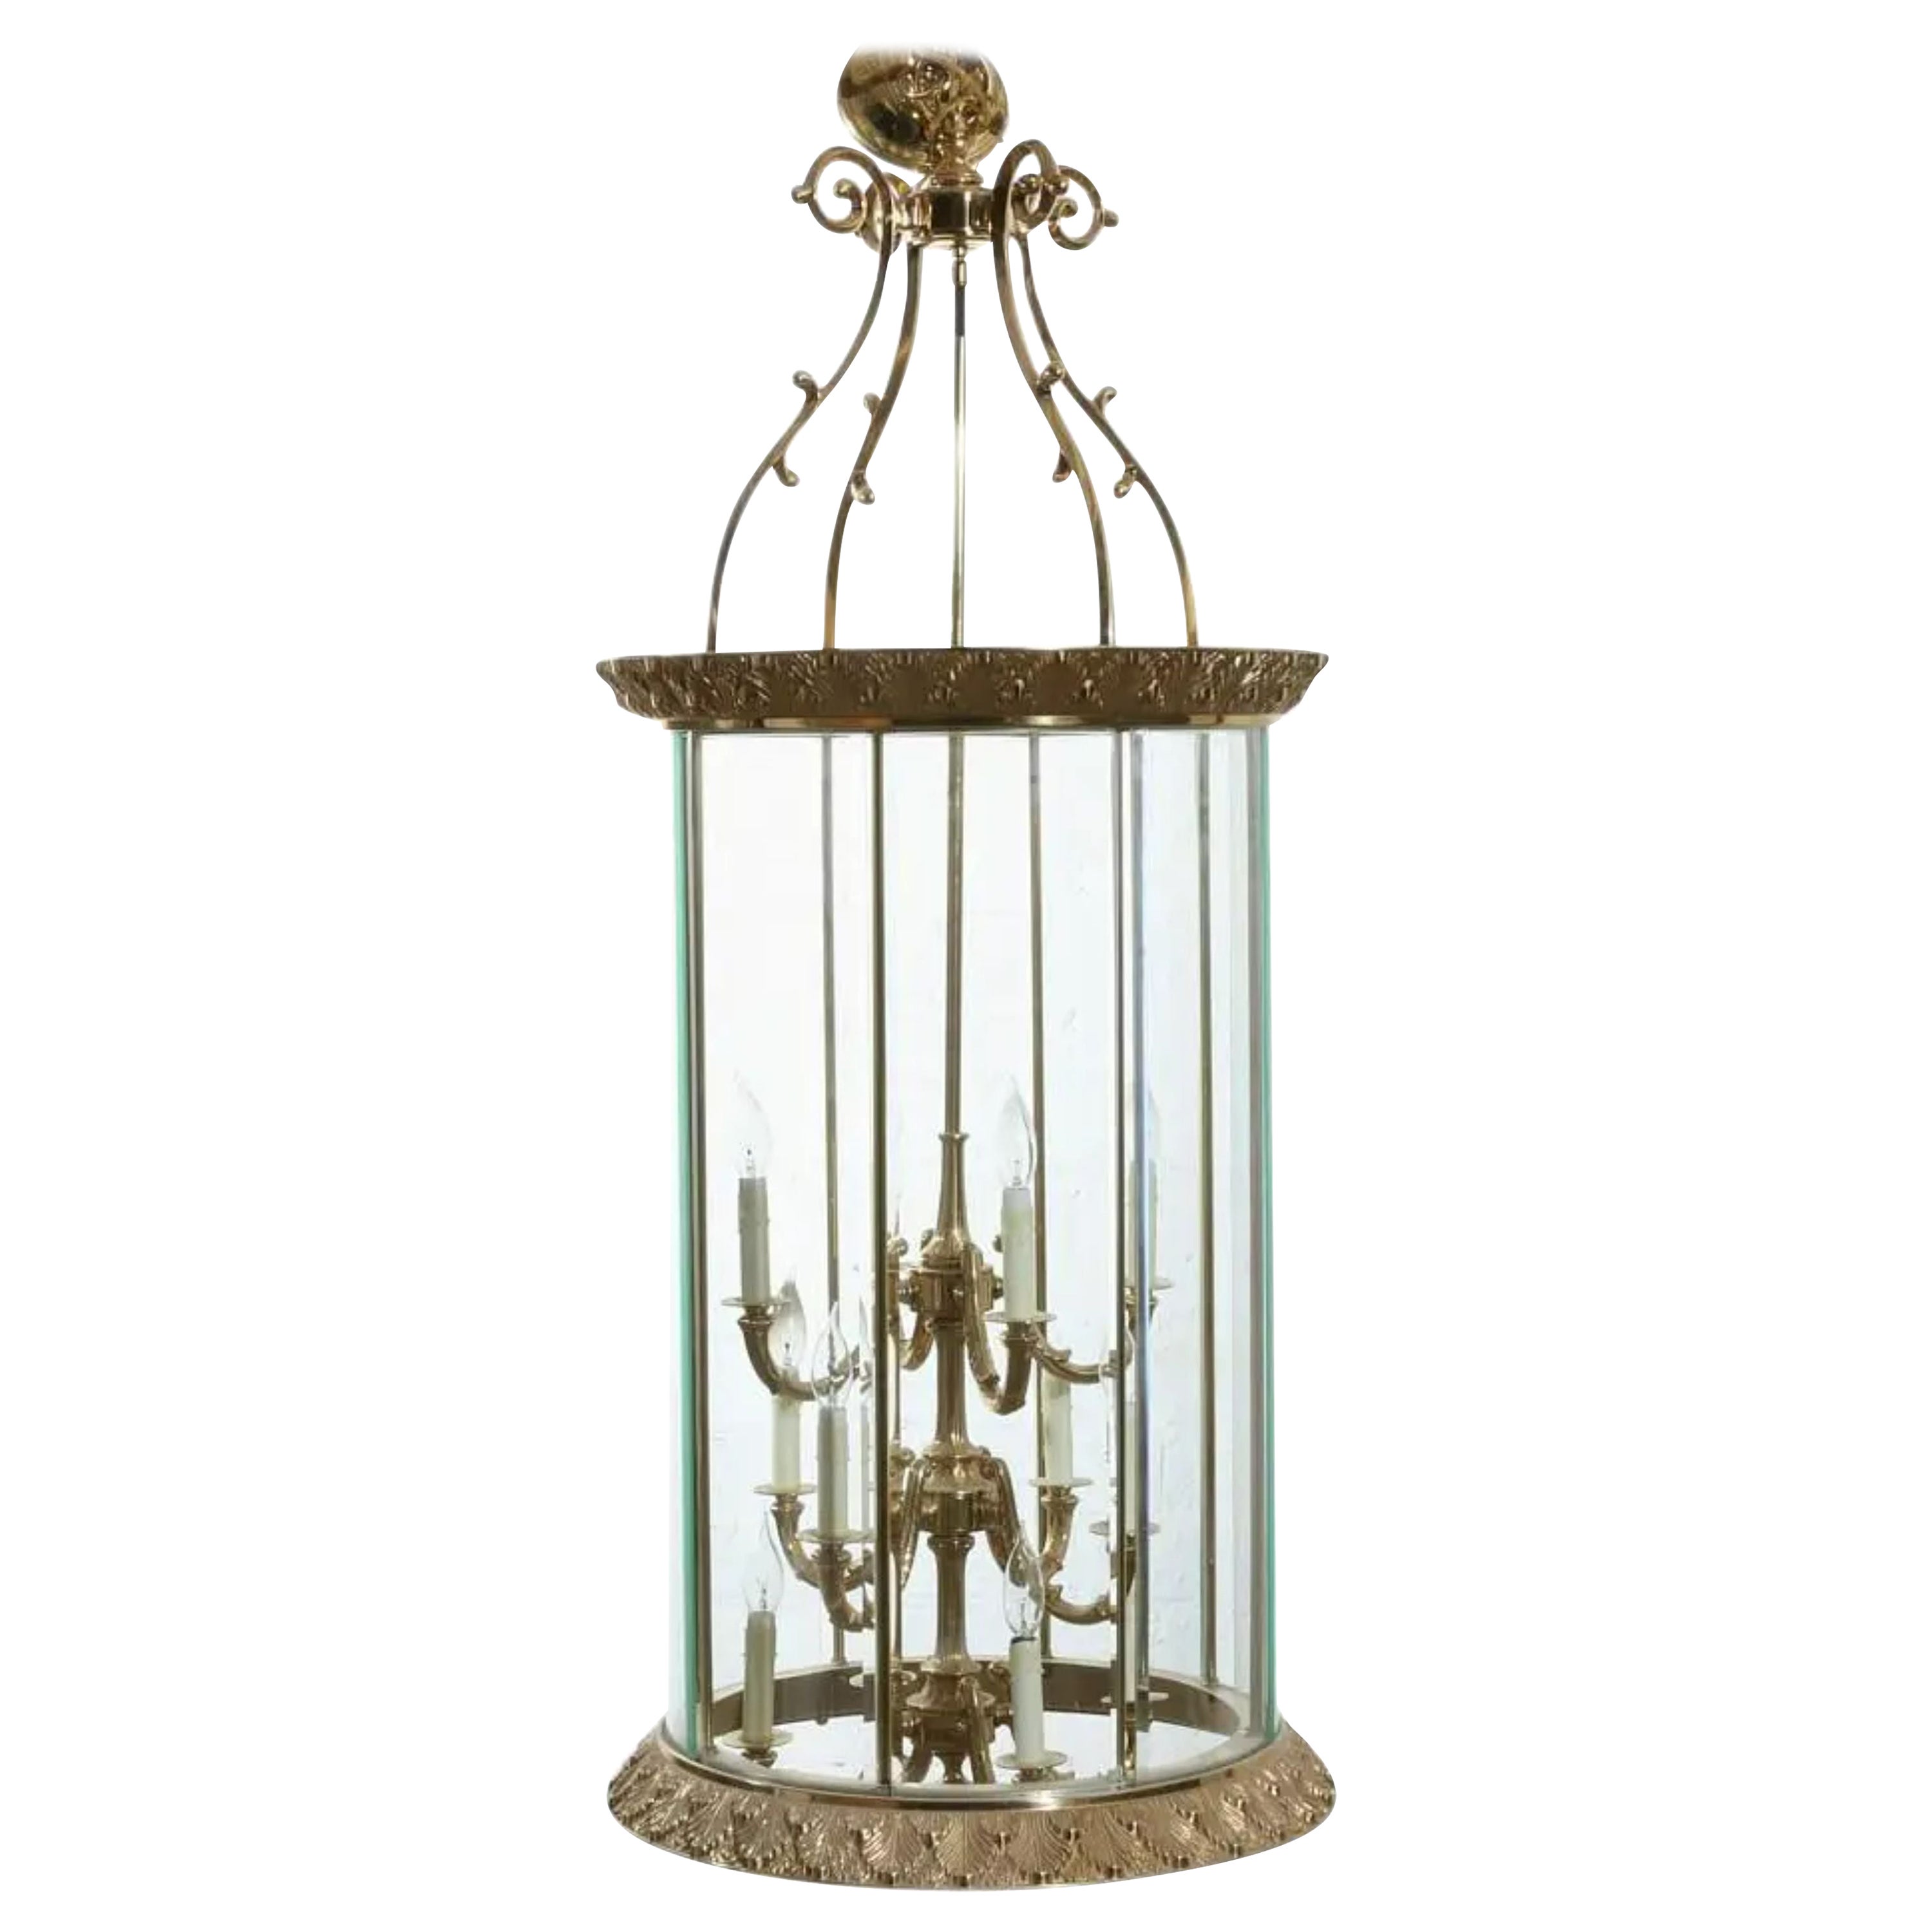 Vintage Hollywood Regency Gilt Brass & Glass Lantern Chandelier